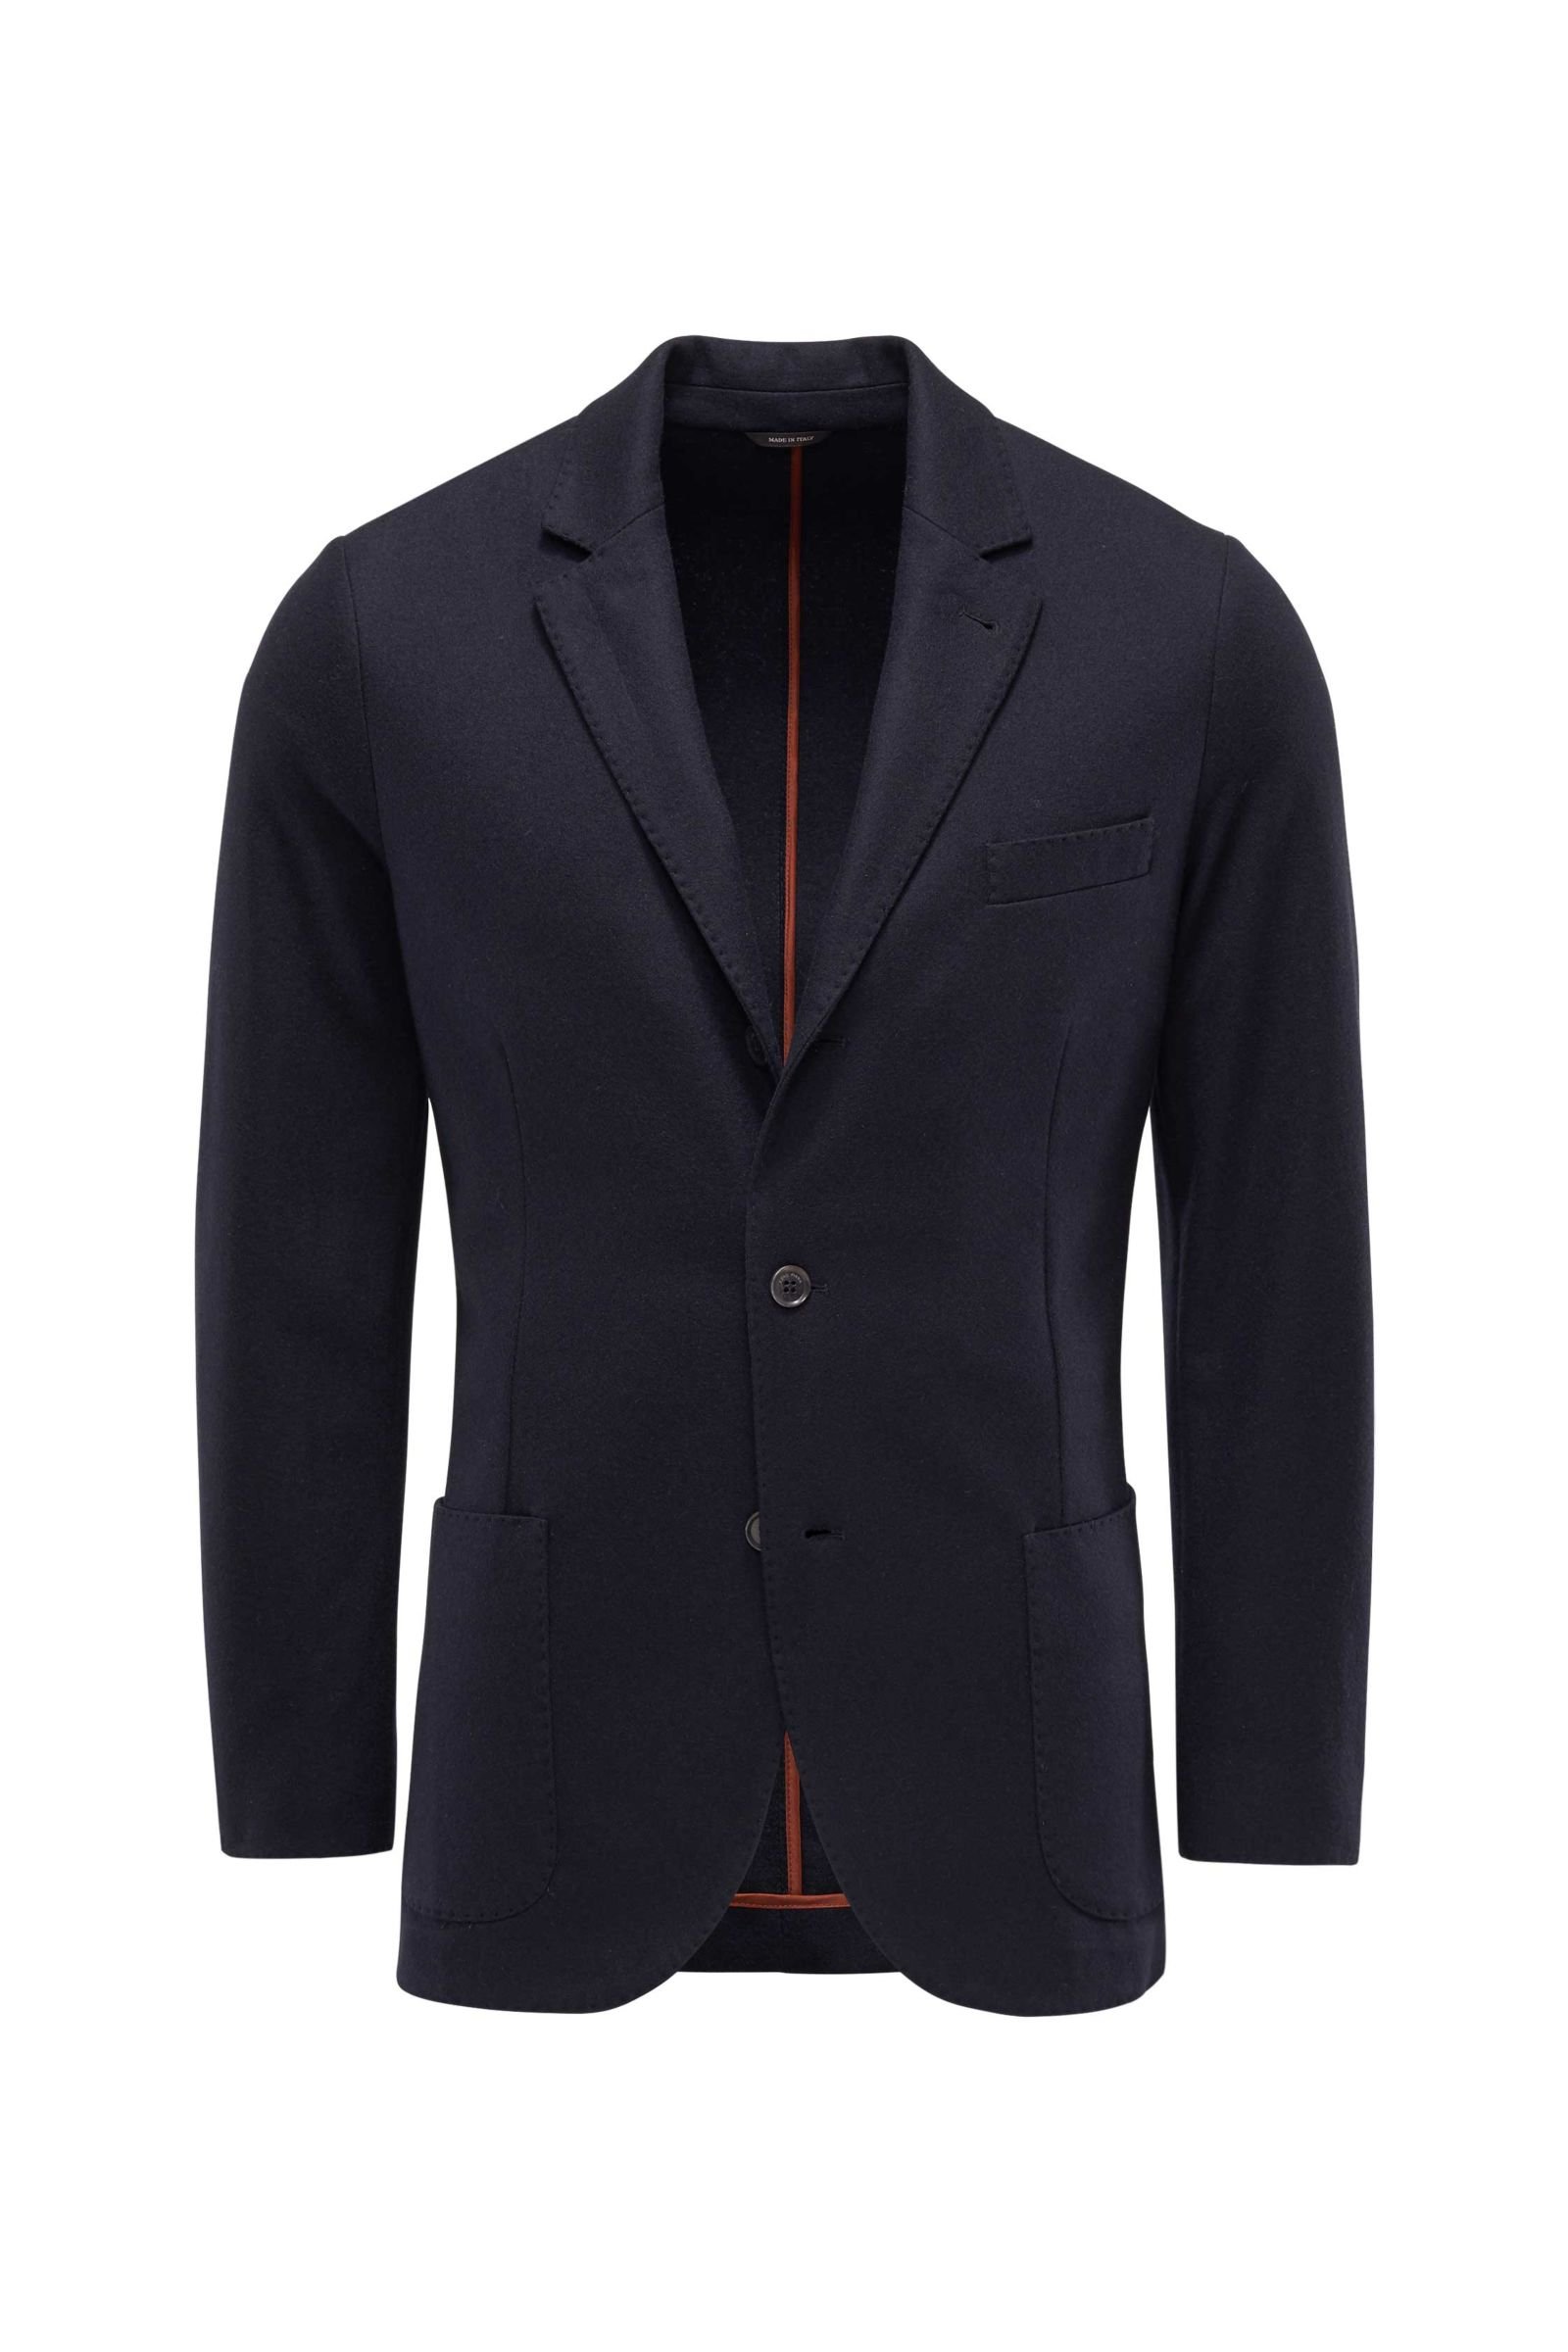 Cashmere jersey smart-casual jacket 'Sweater Jacket' navy